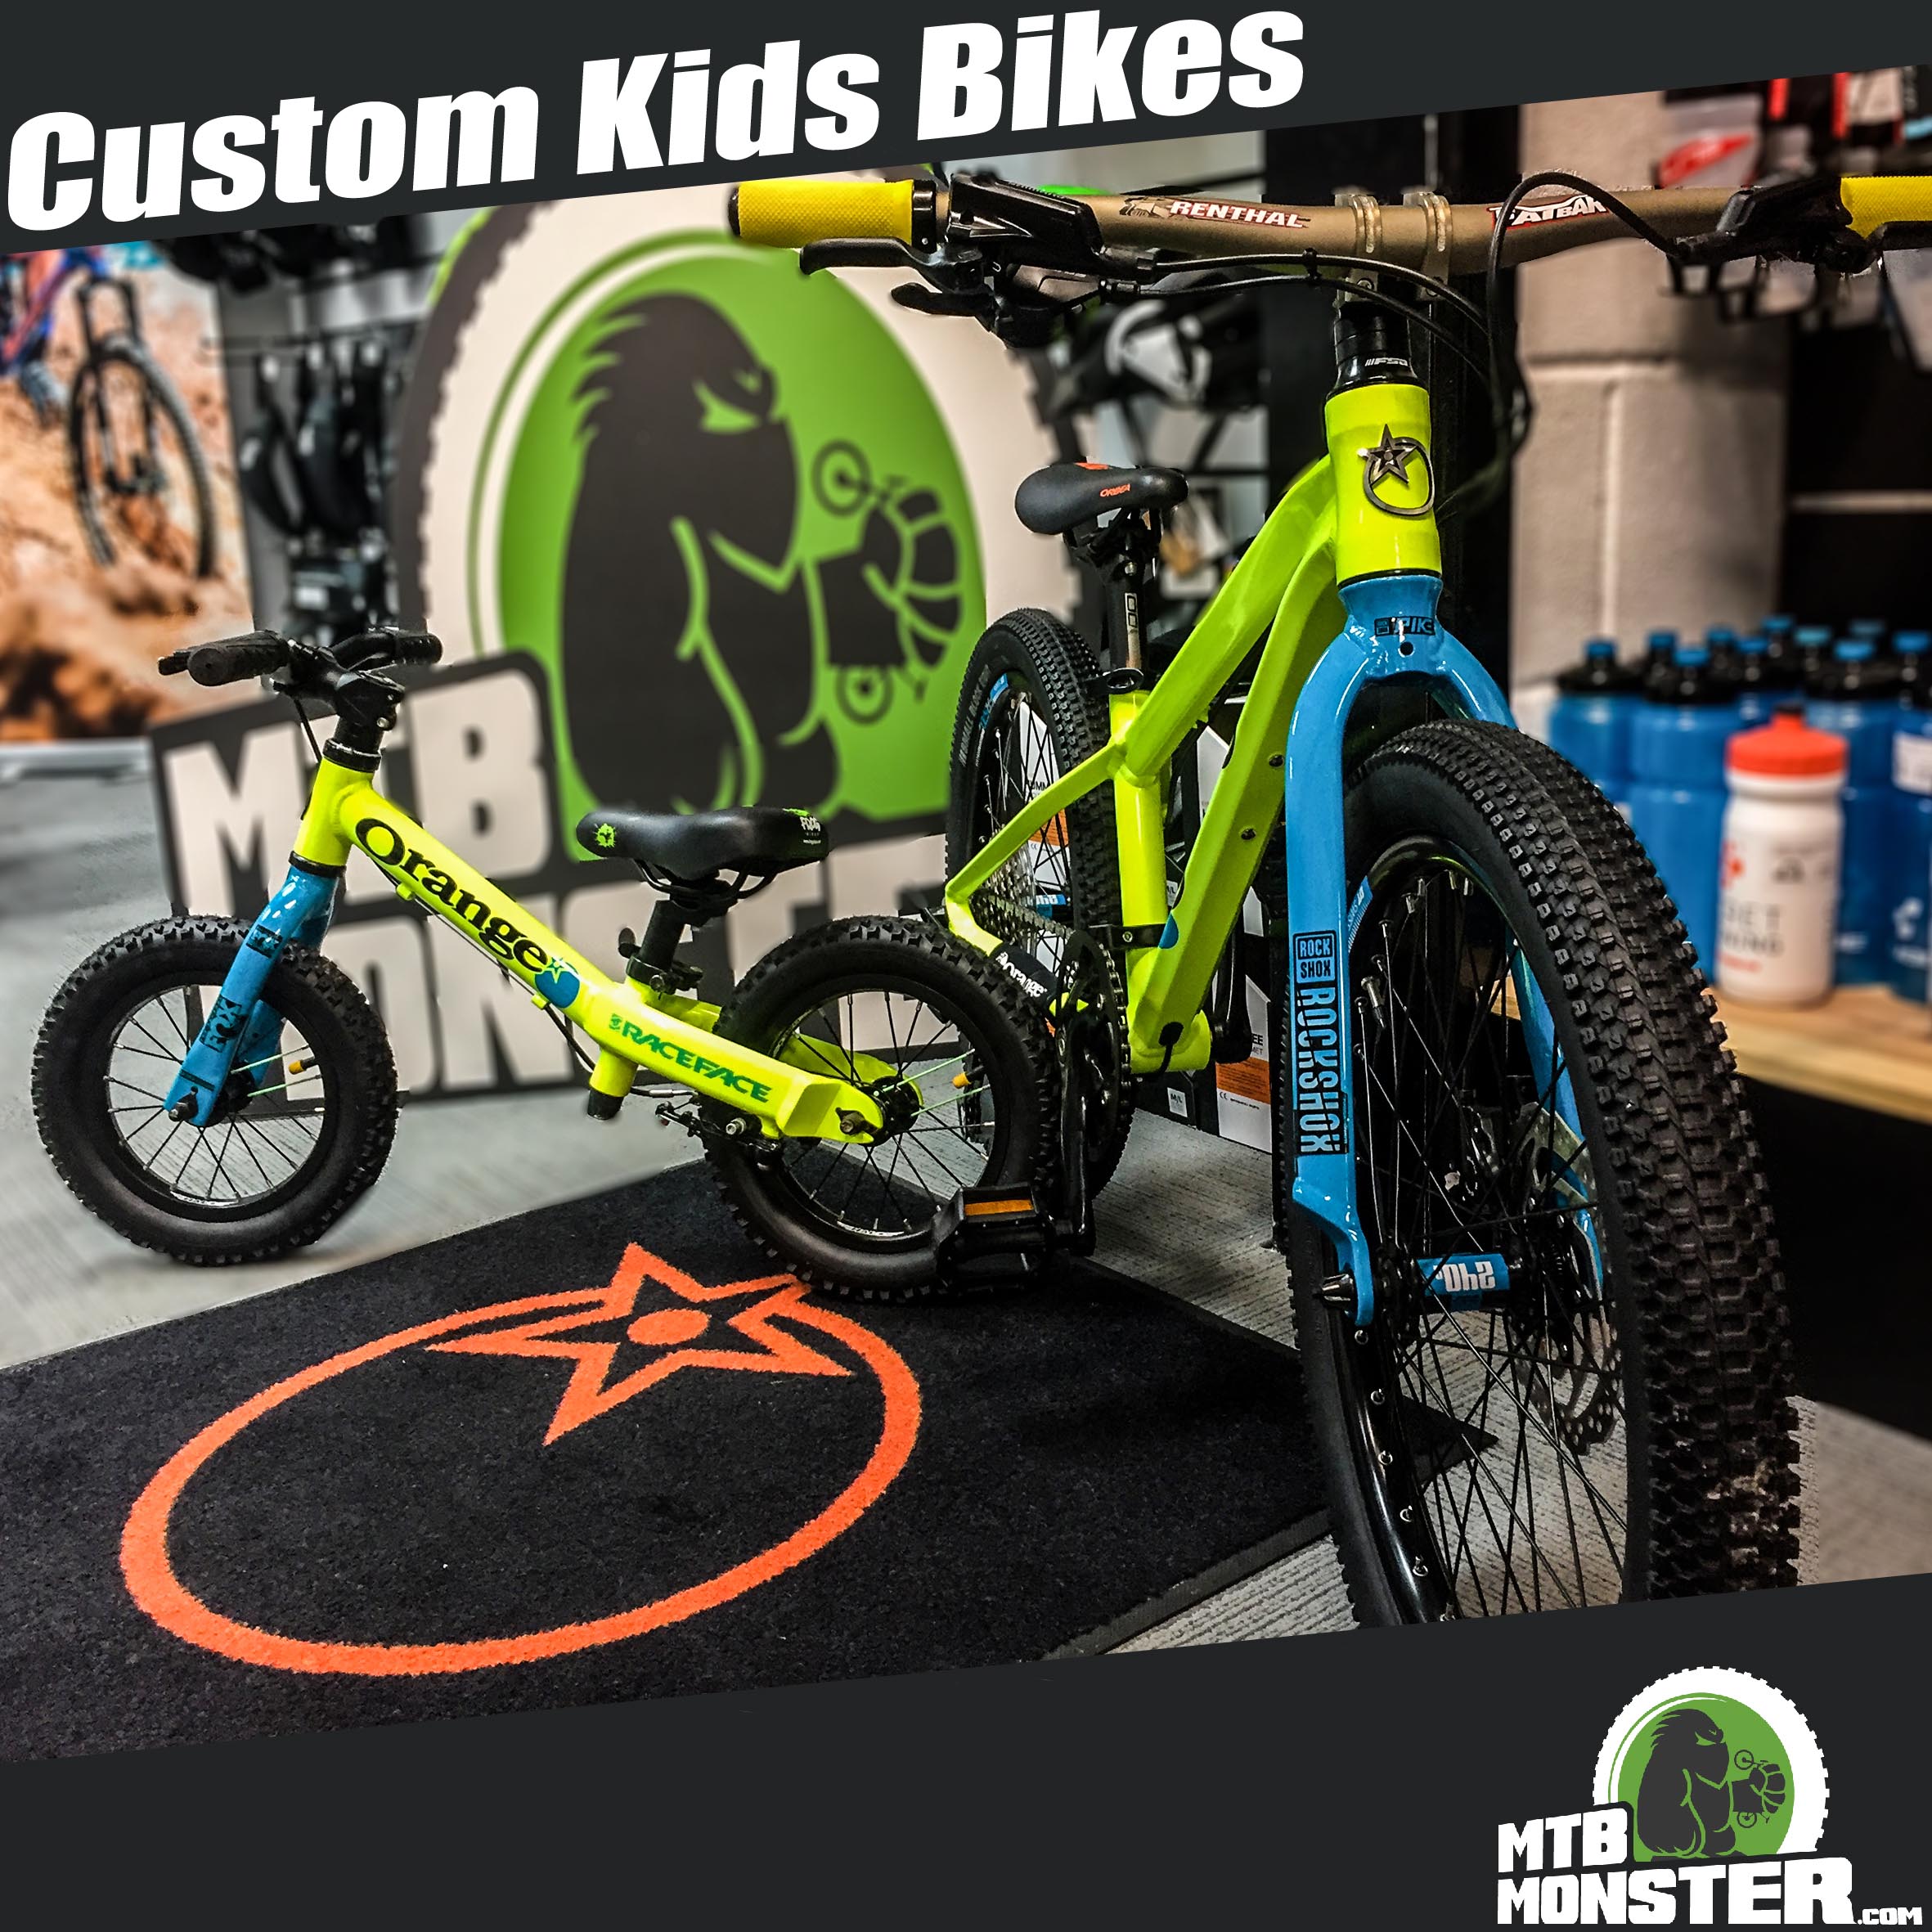 Custom Kids Bikes